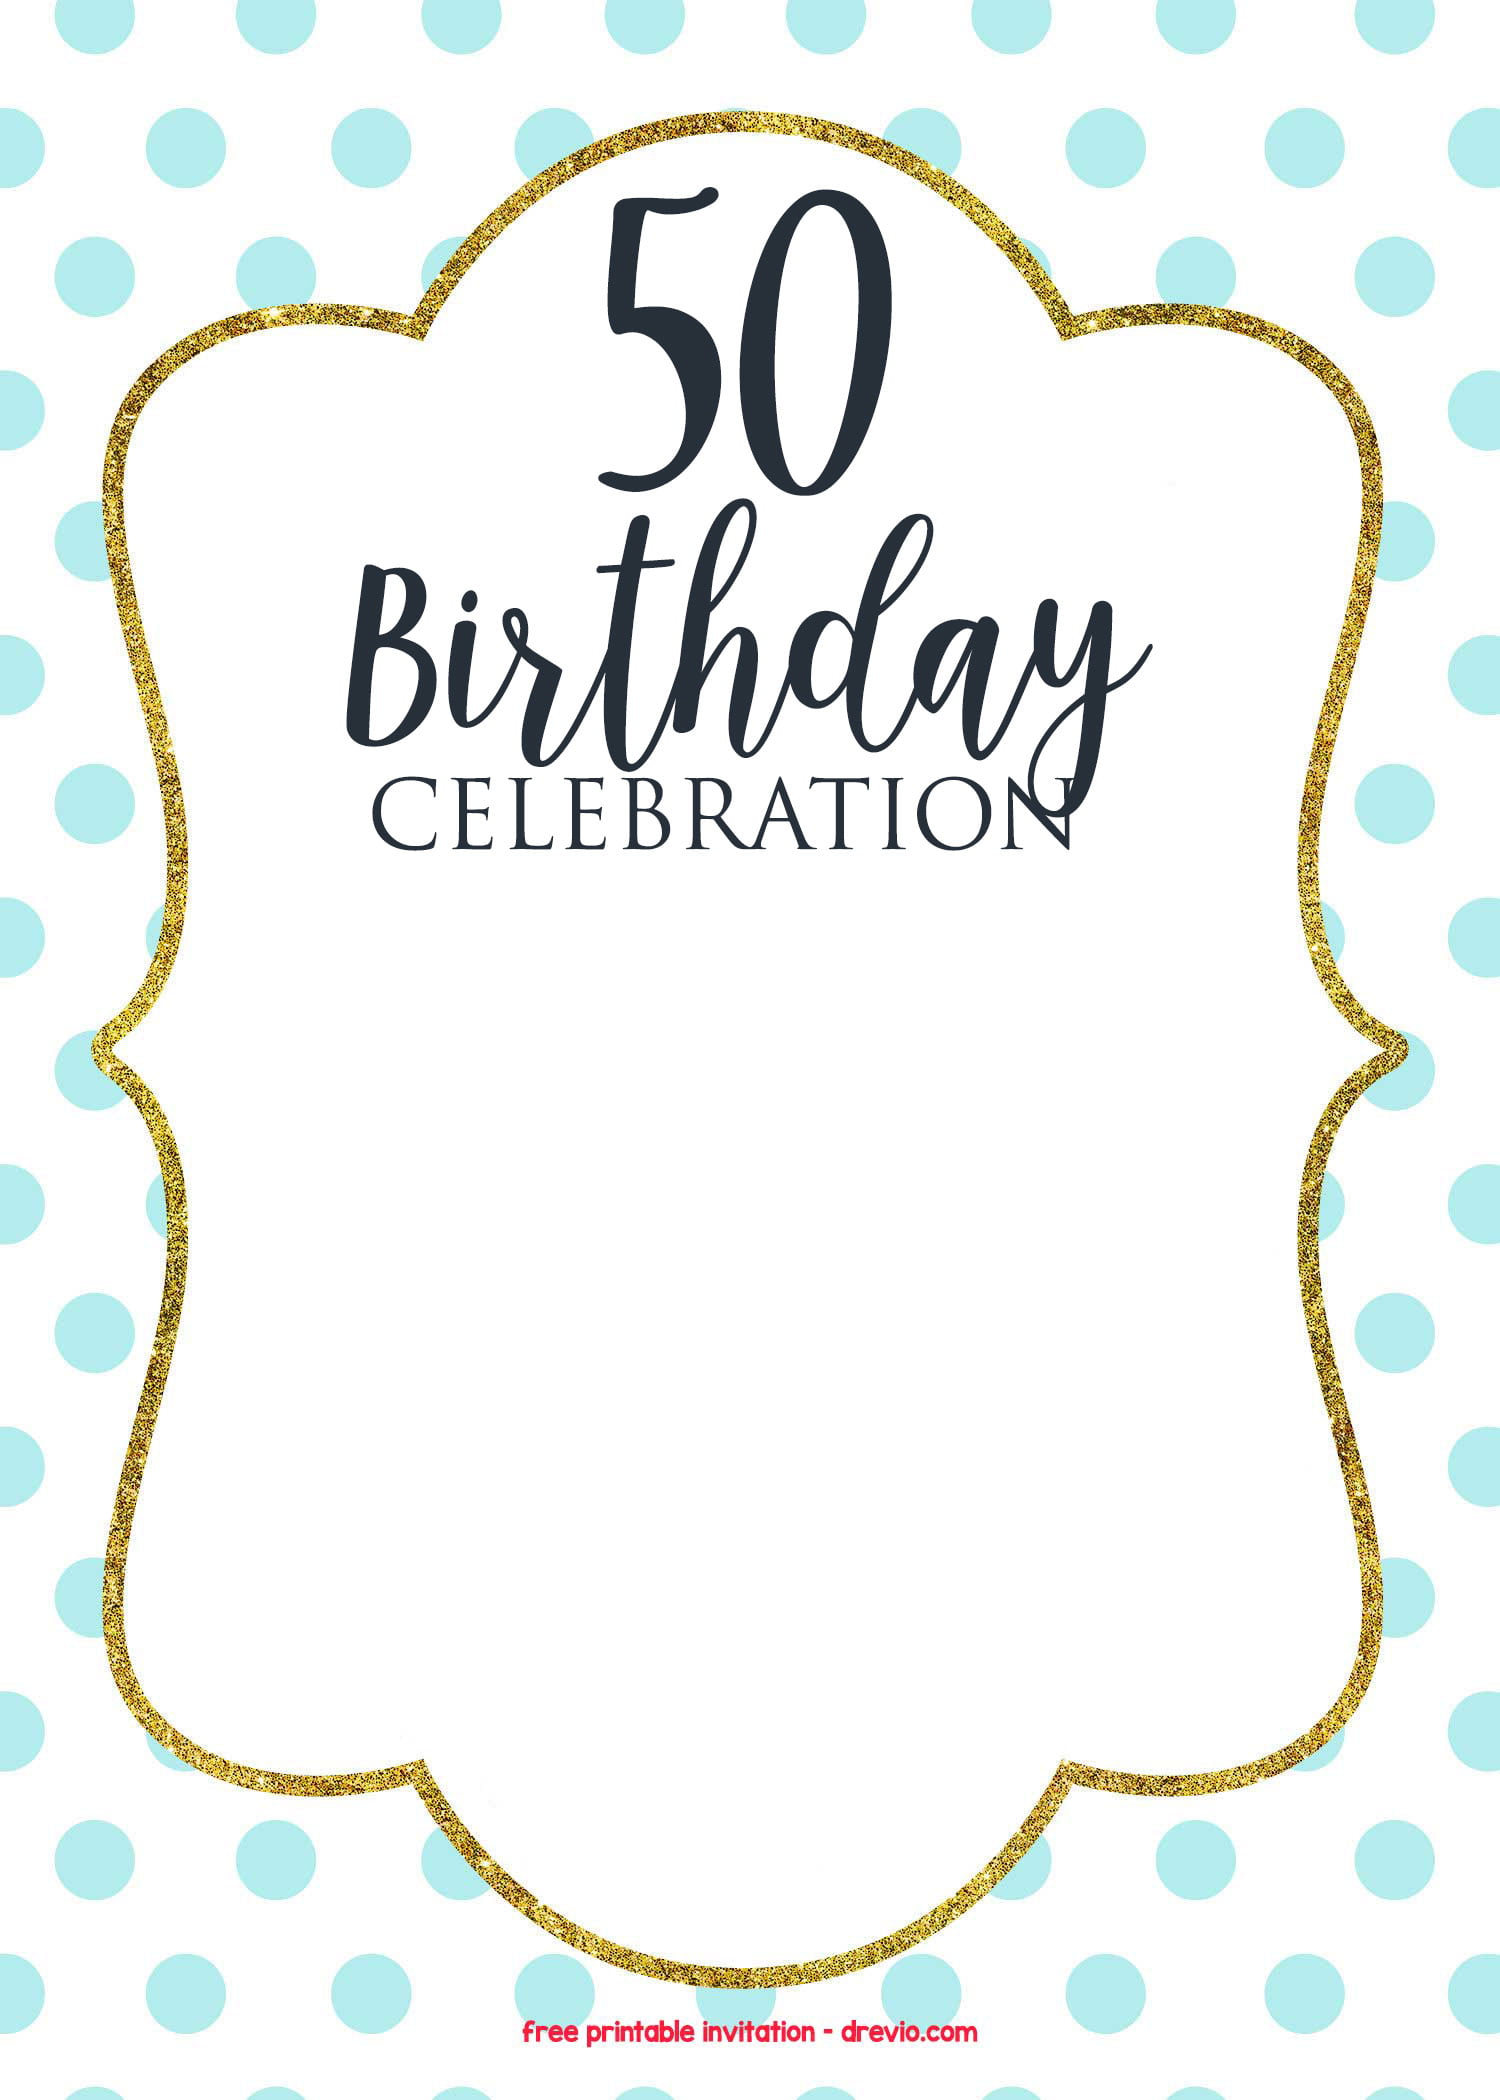 50th Birthday Invitations Online FREE PRINTABLE Birthday Invitation 